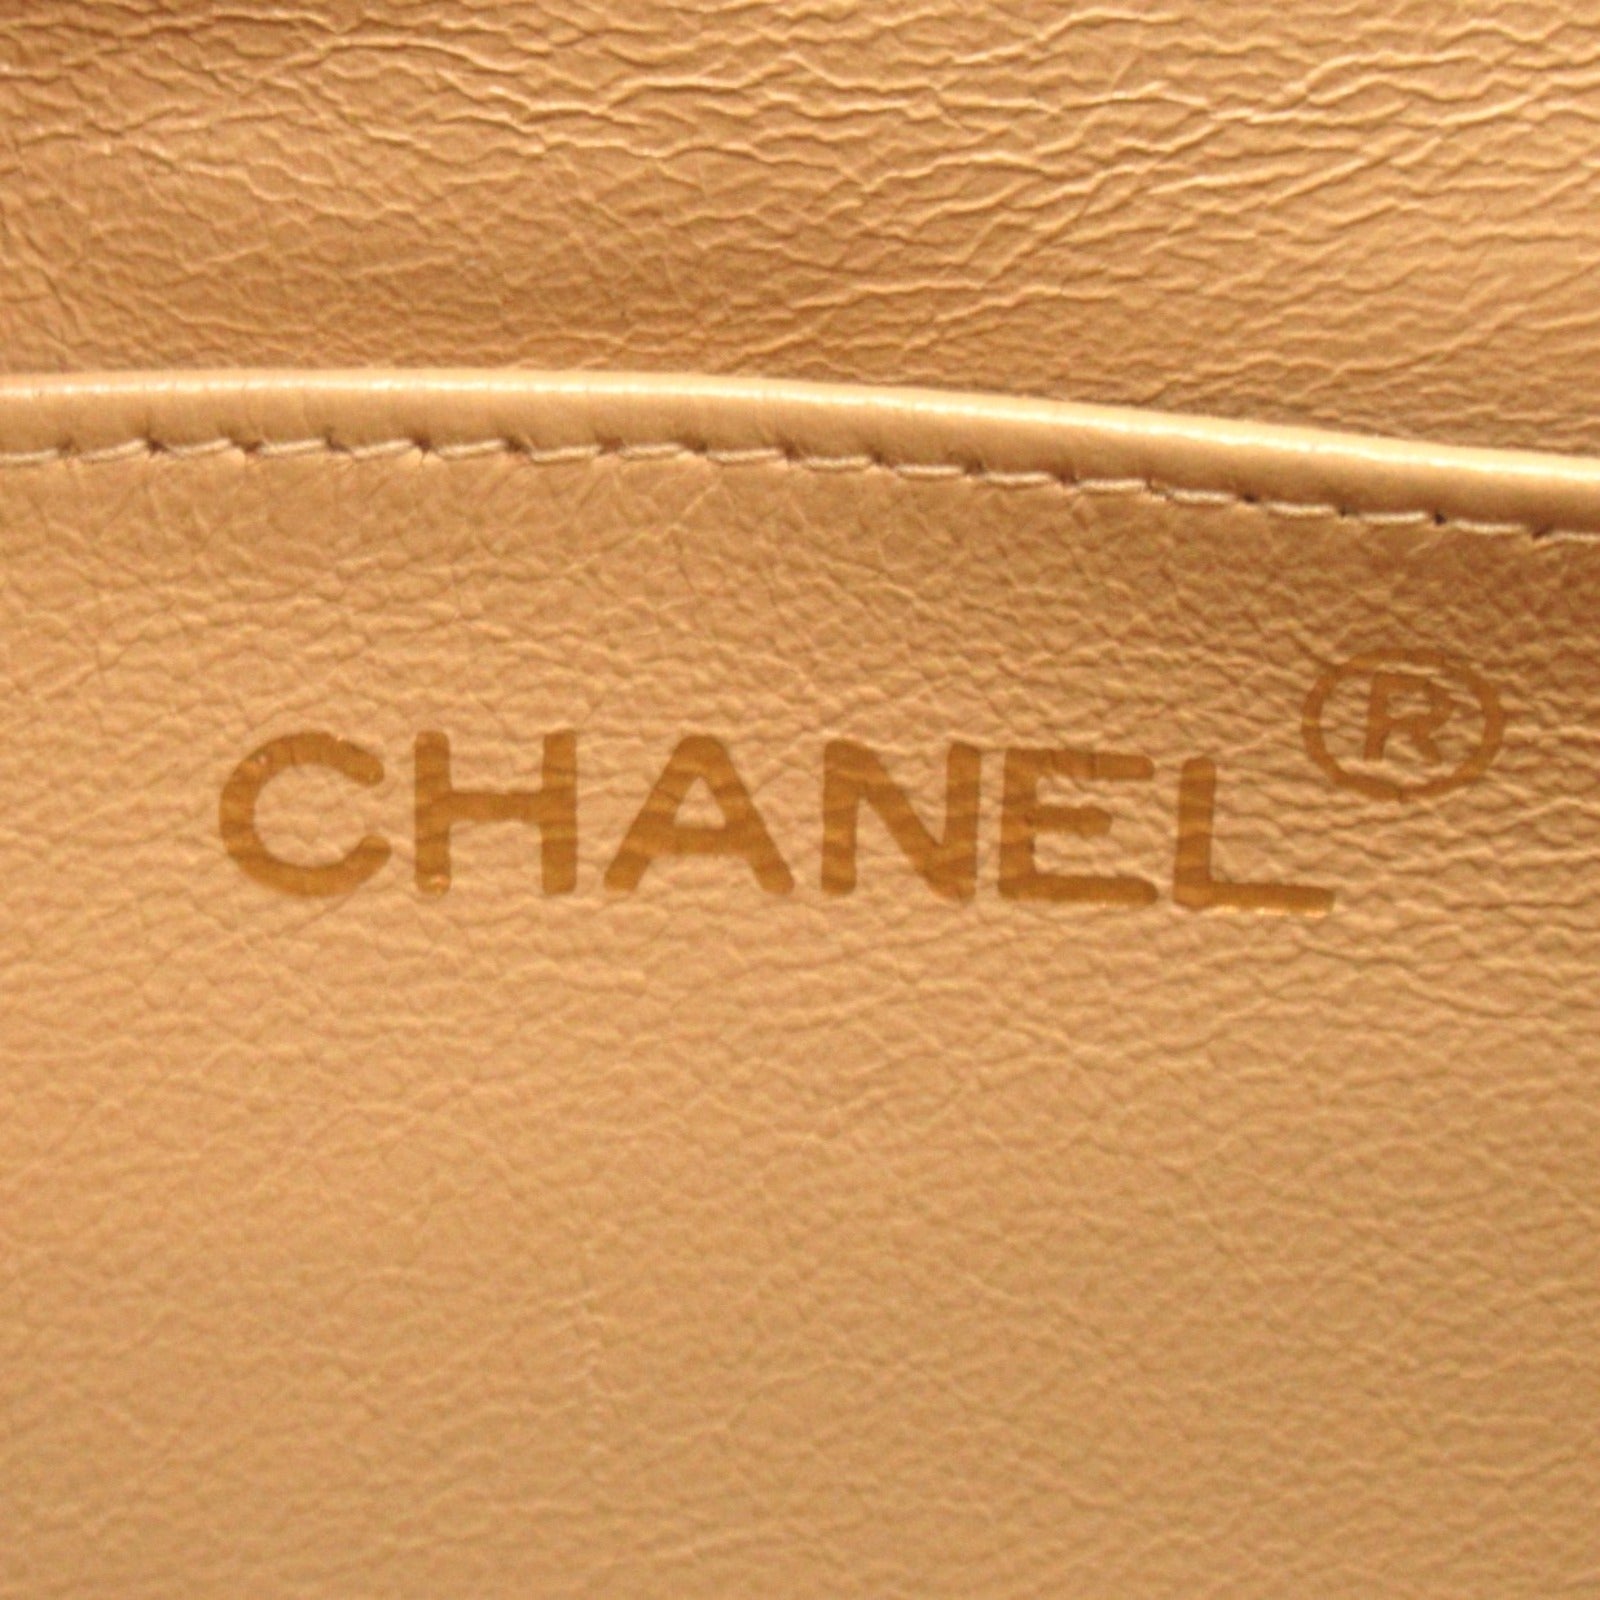 Chanel Beige Caviar Mademoiselle Handbag